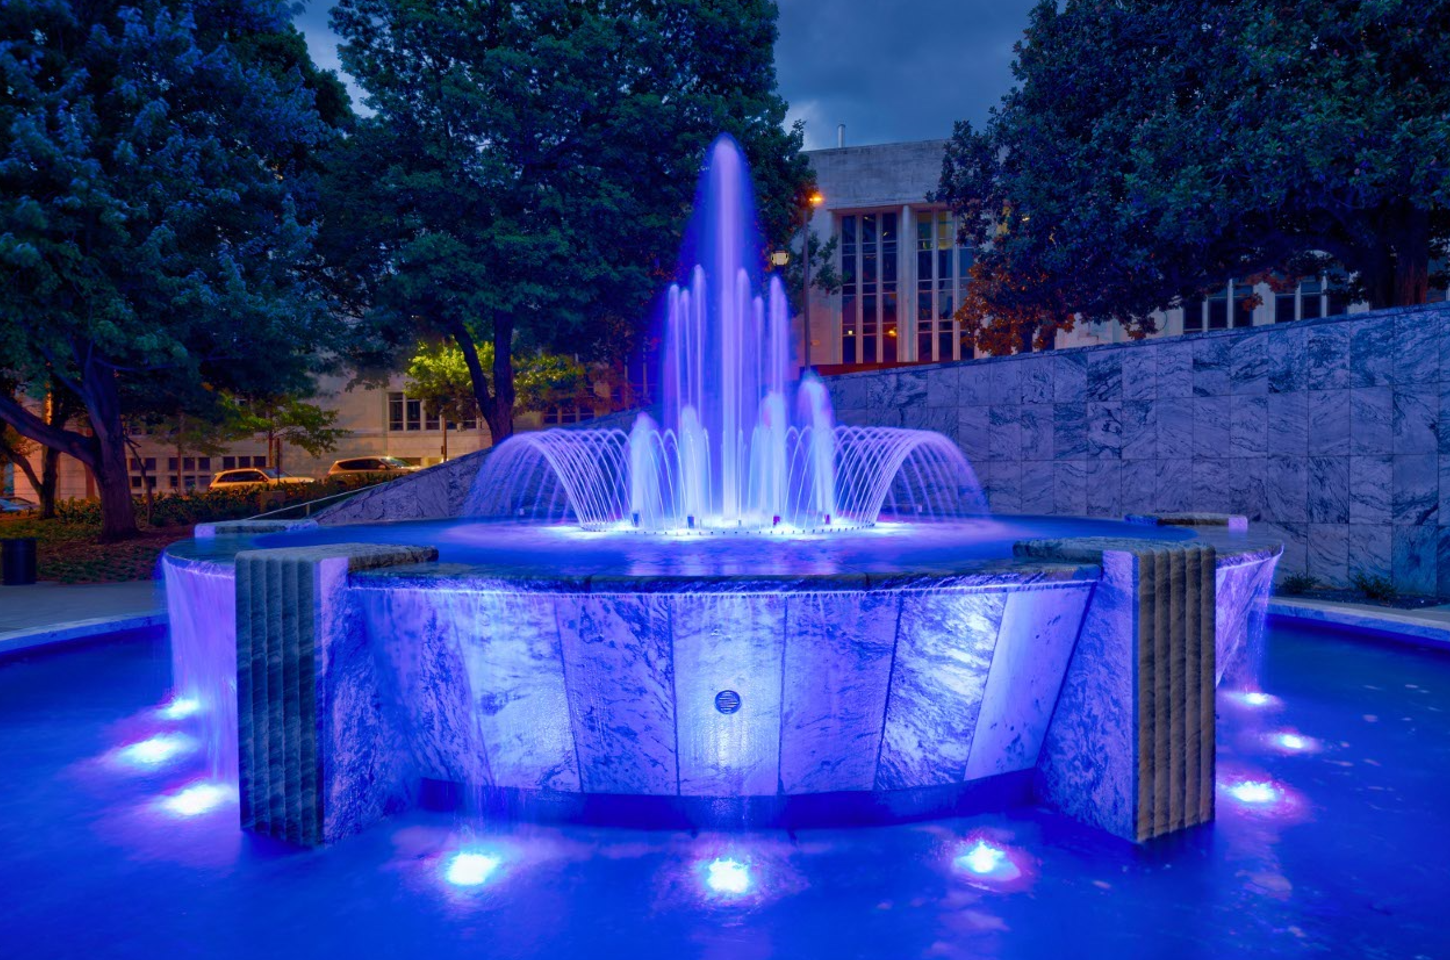 Nighttime view of the GSU Hurt park fountain